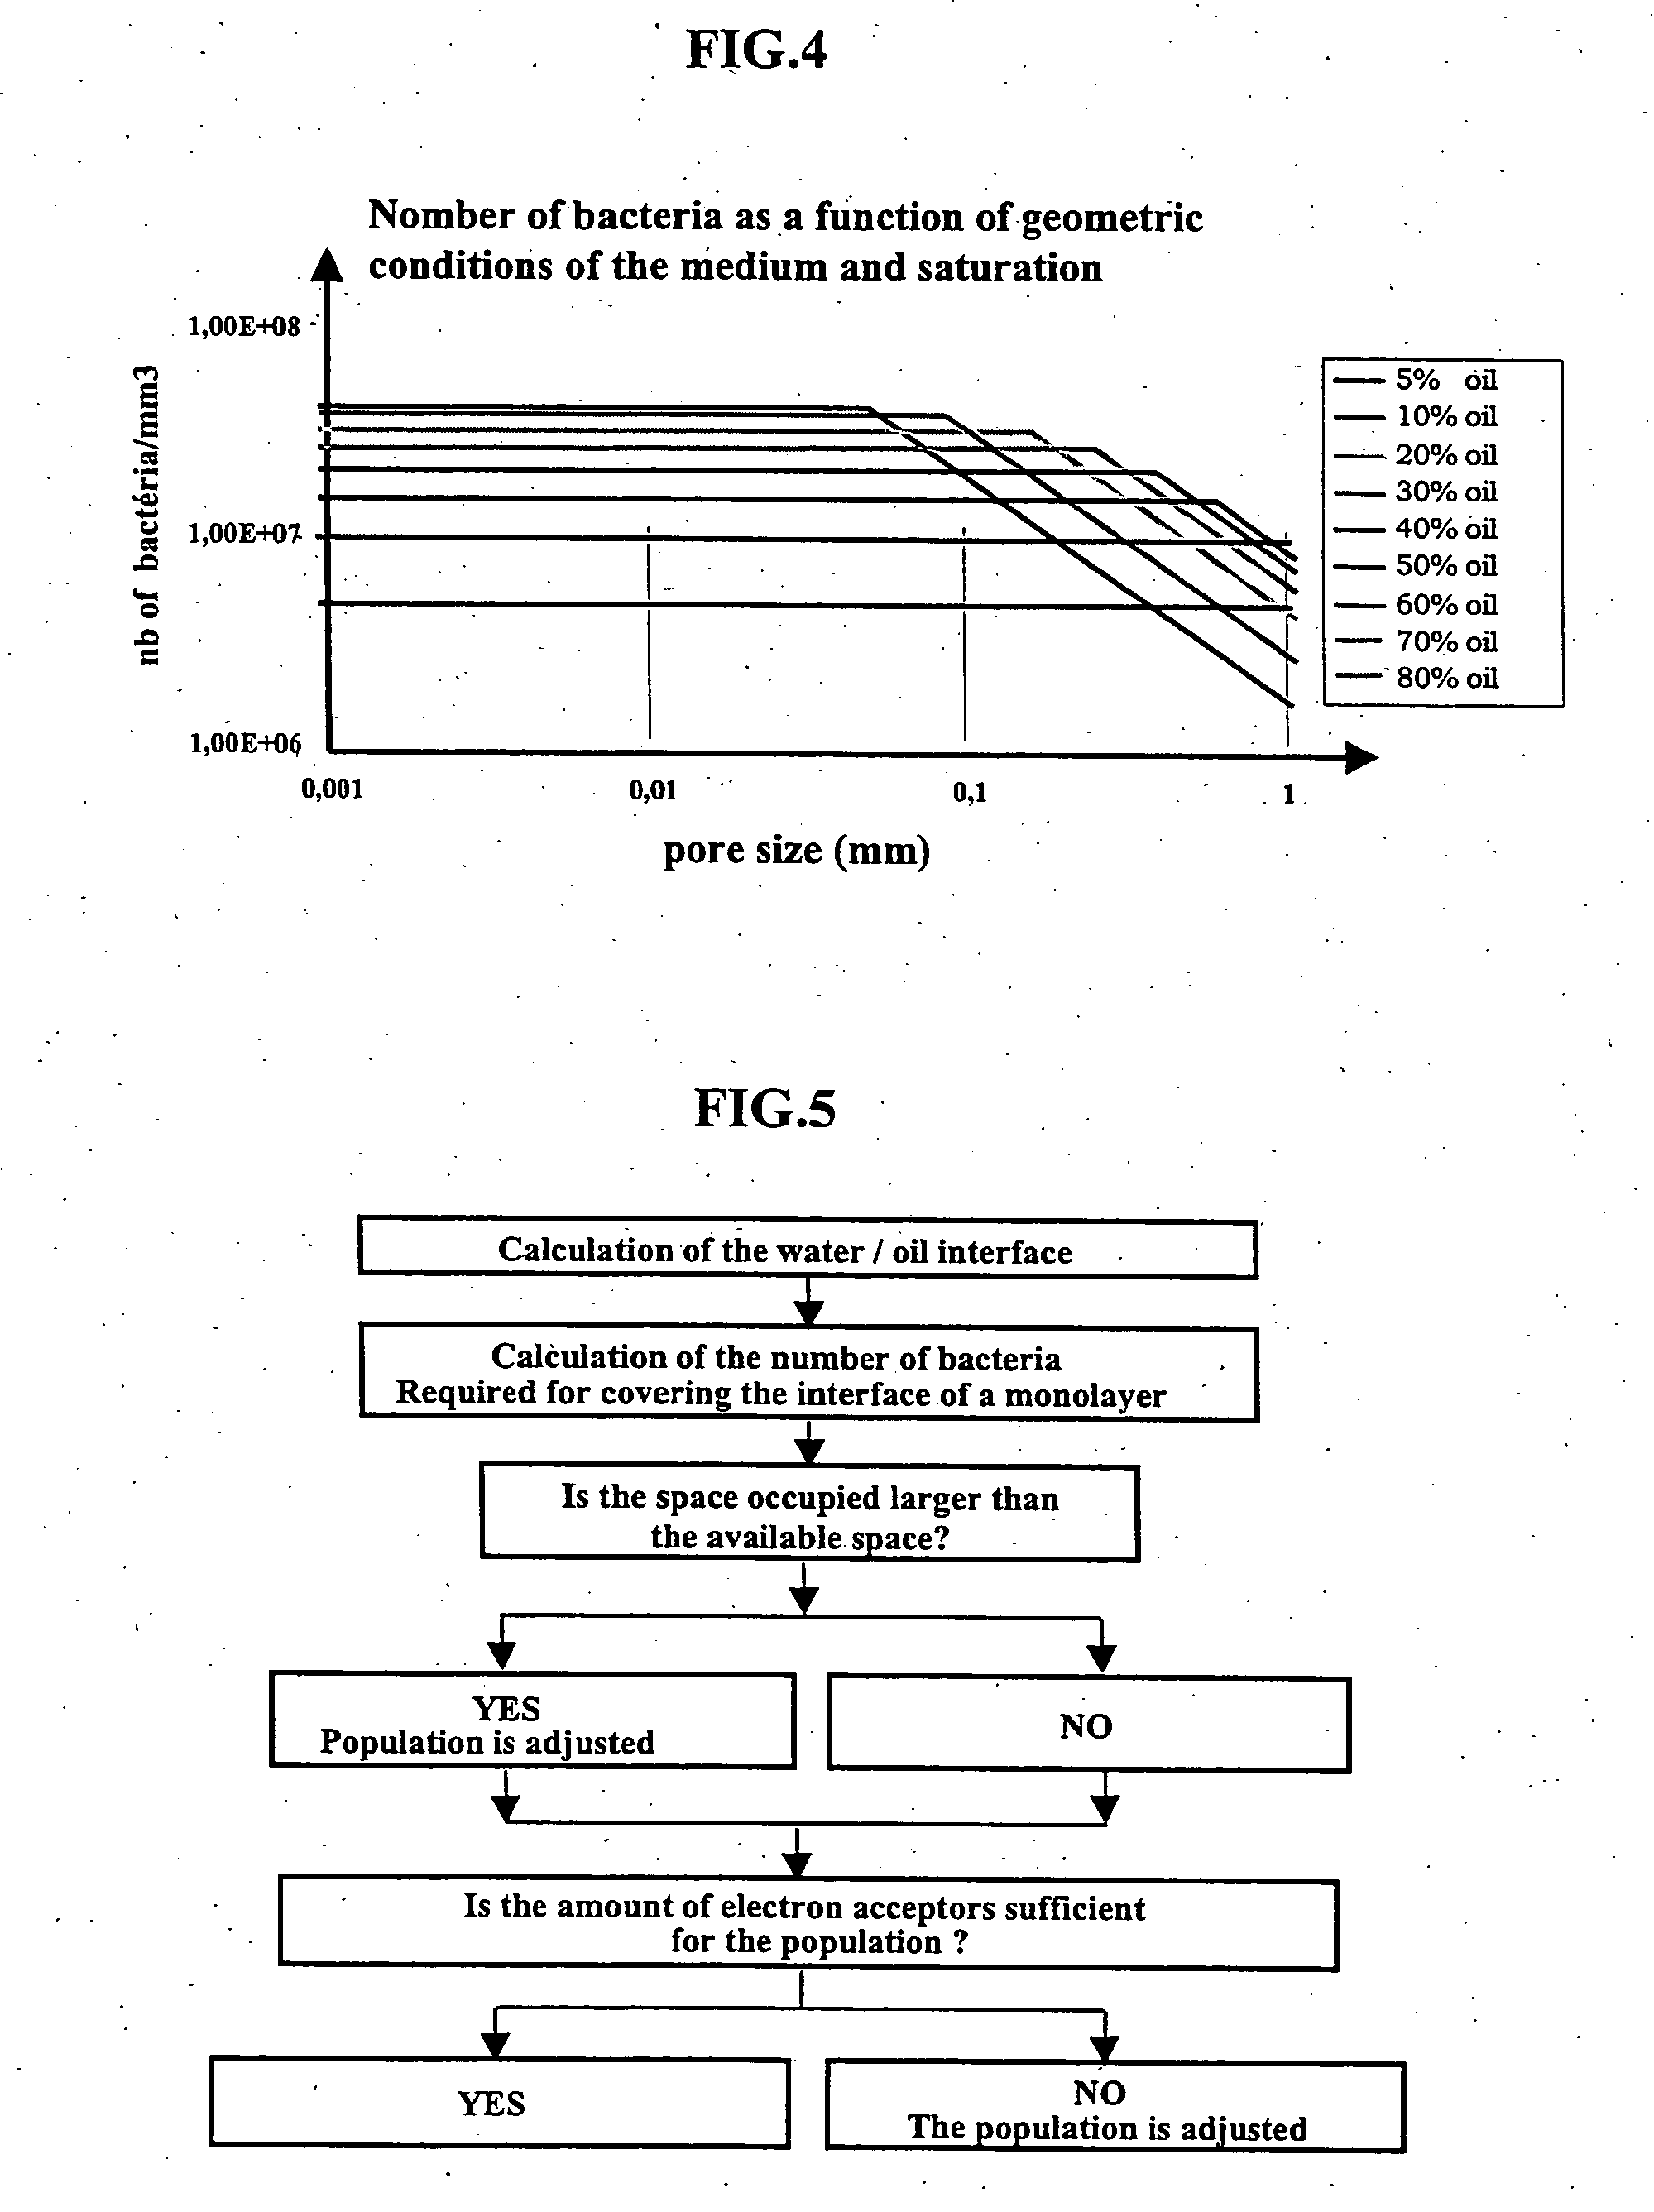 Method for modelling hydrocarbon degradation in an oil deposit